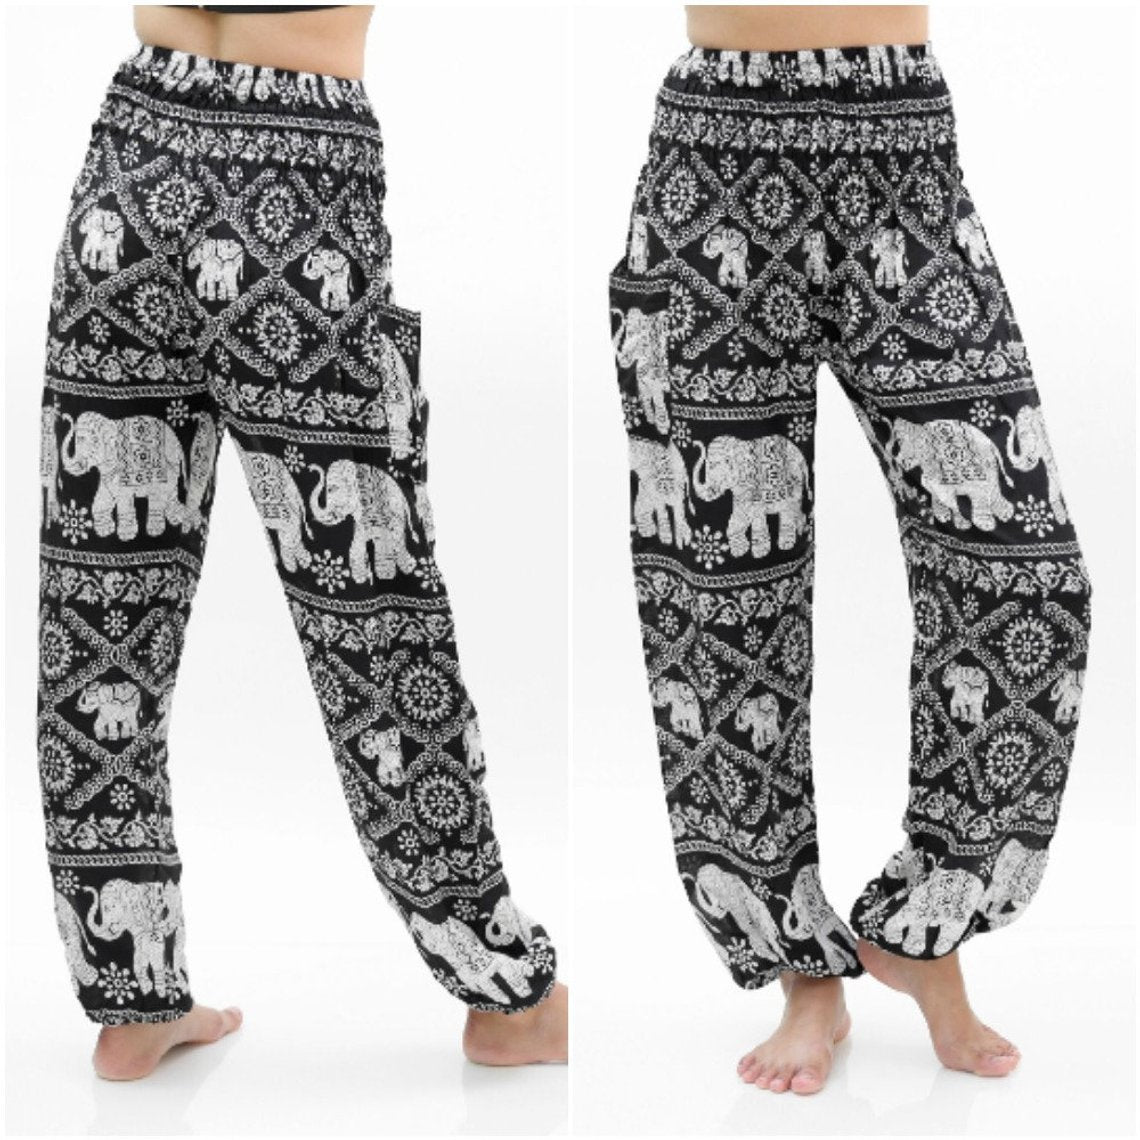 Black ELEPHANT Pants Women Boho Pants Hippie Pants Yoga